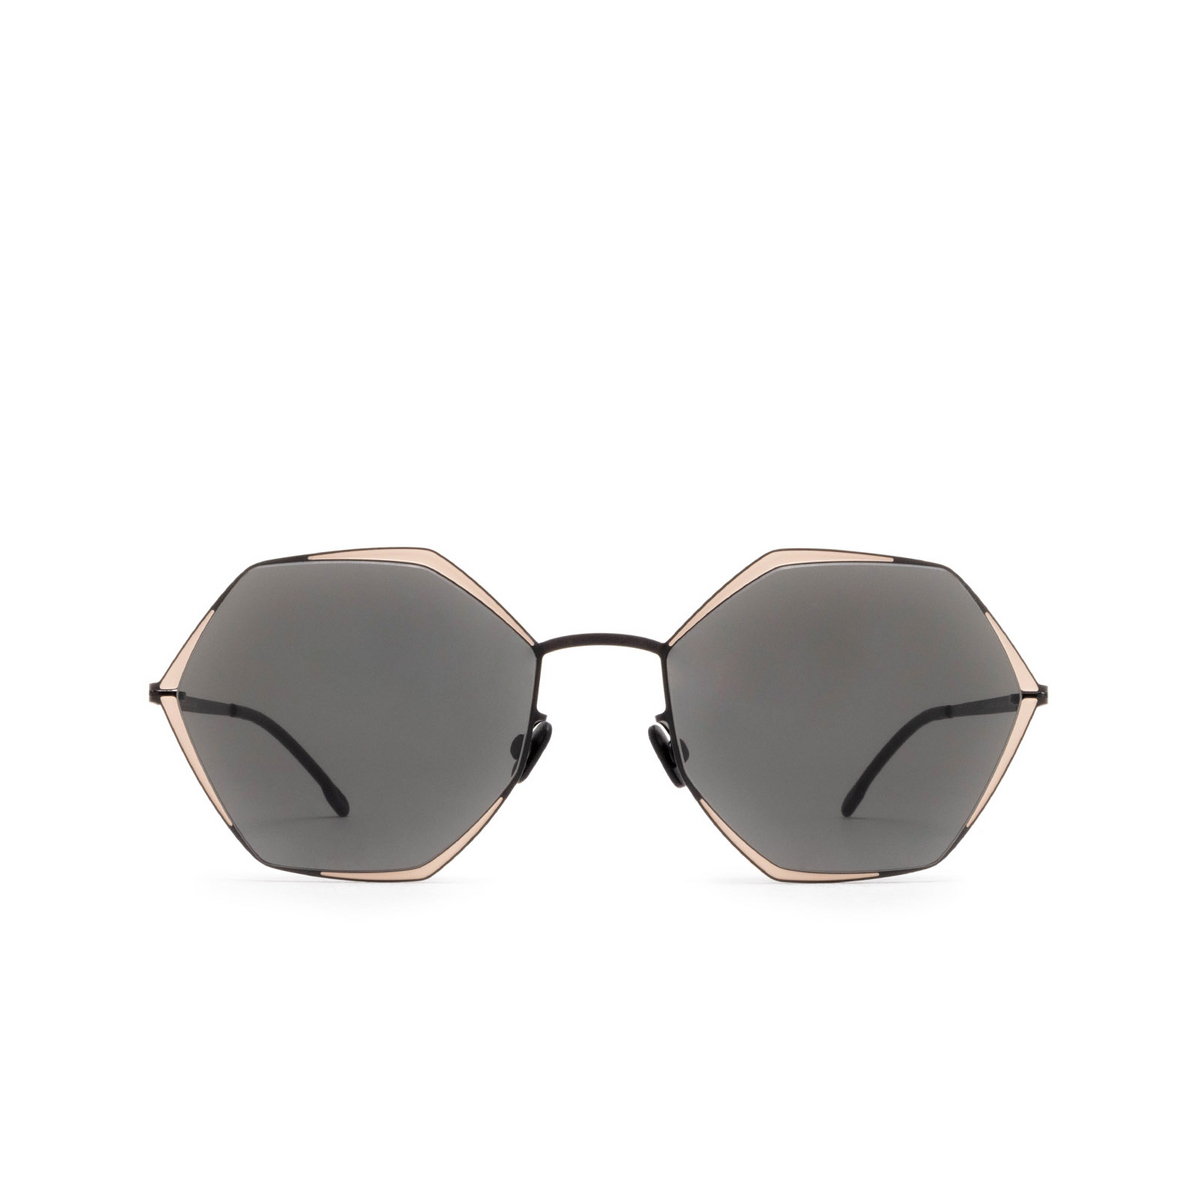 Mykita ALESSIA Sunglasses 404 Black/Sand - front view